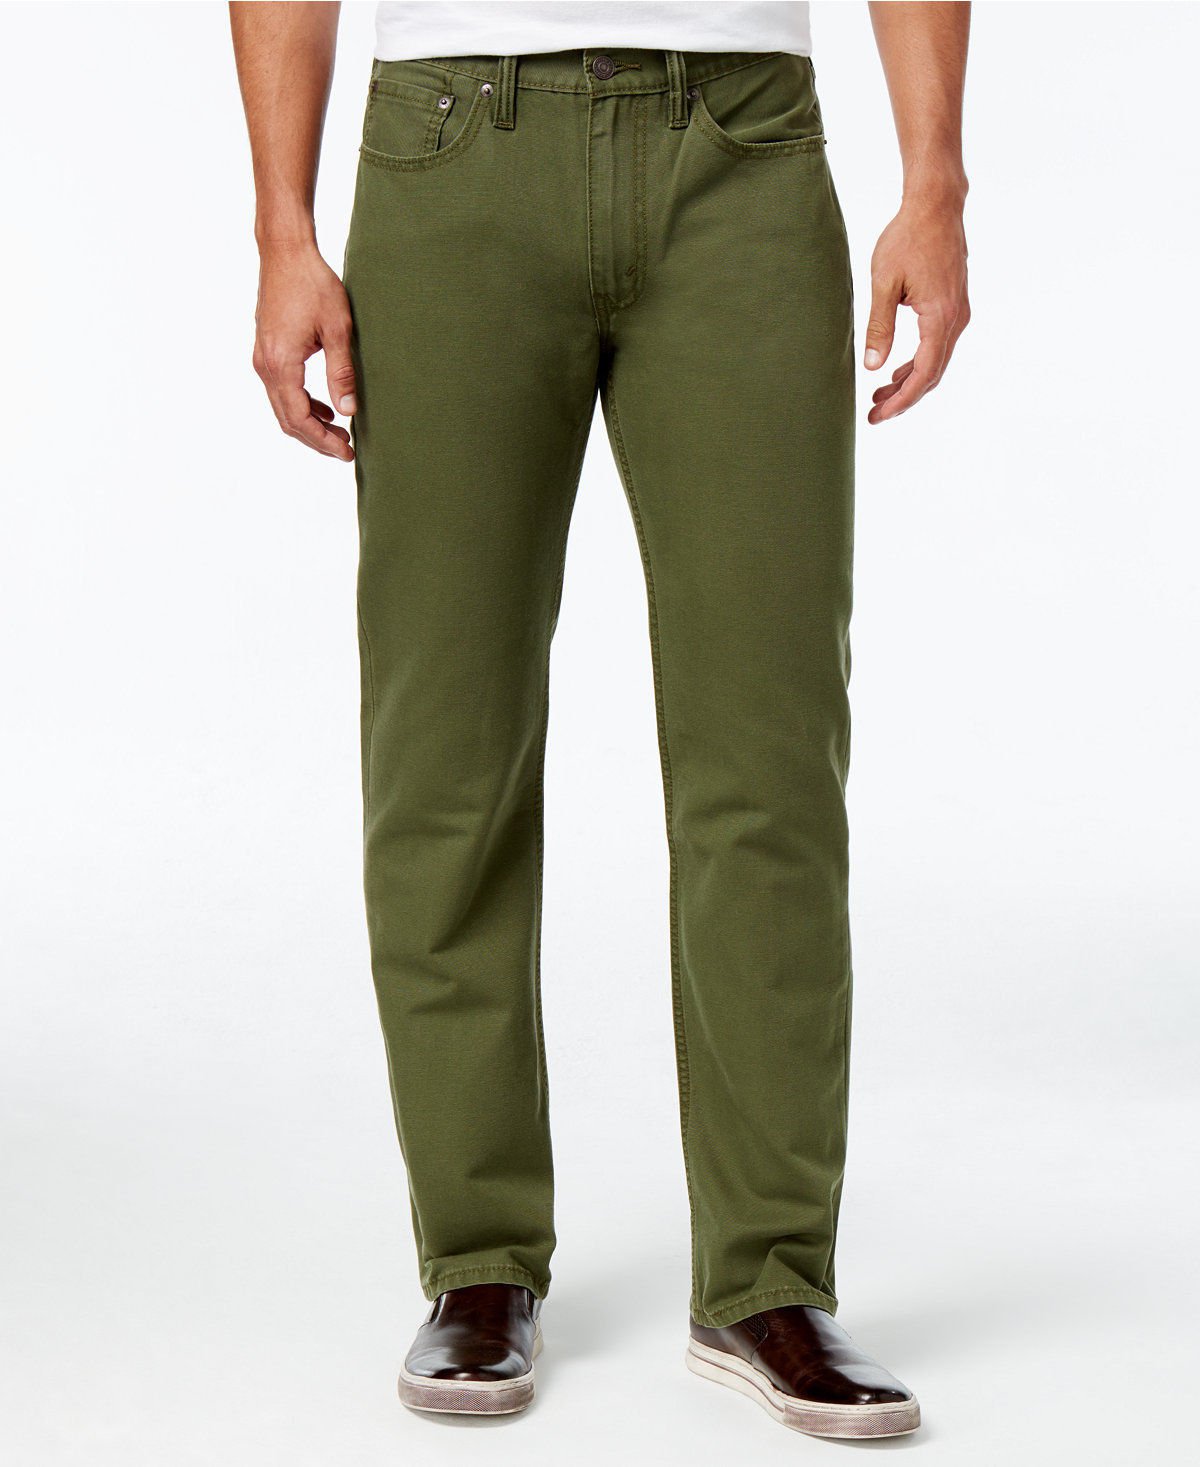 Levis 514 Straight Fit Padox Twill Jeans 0784 Green NWT size 32x36